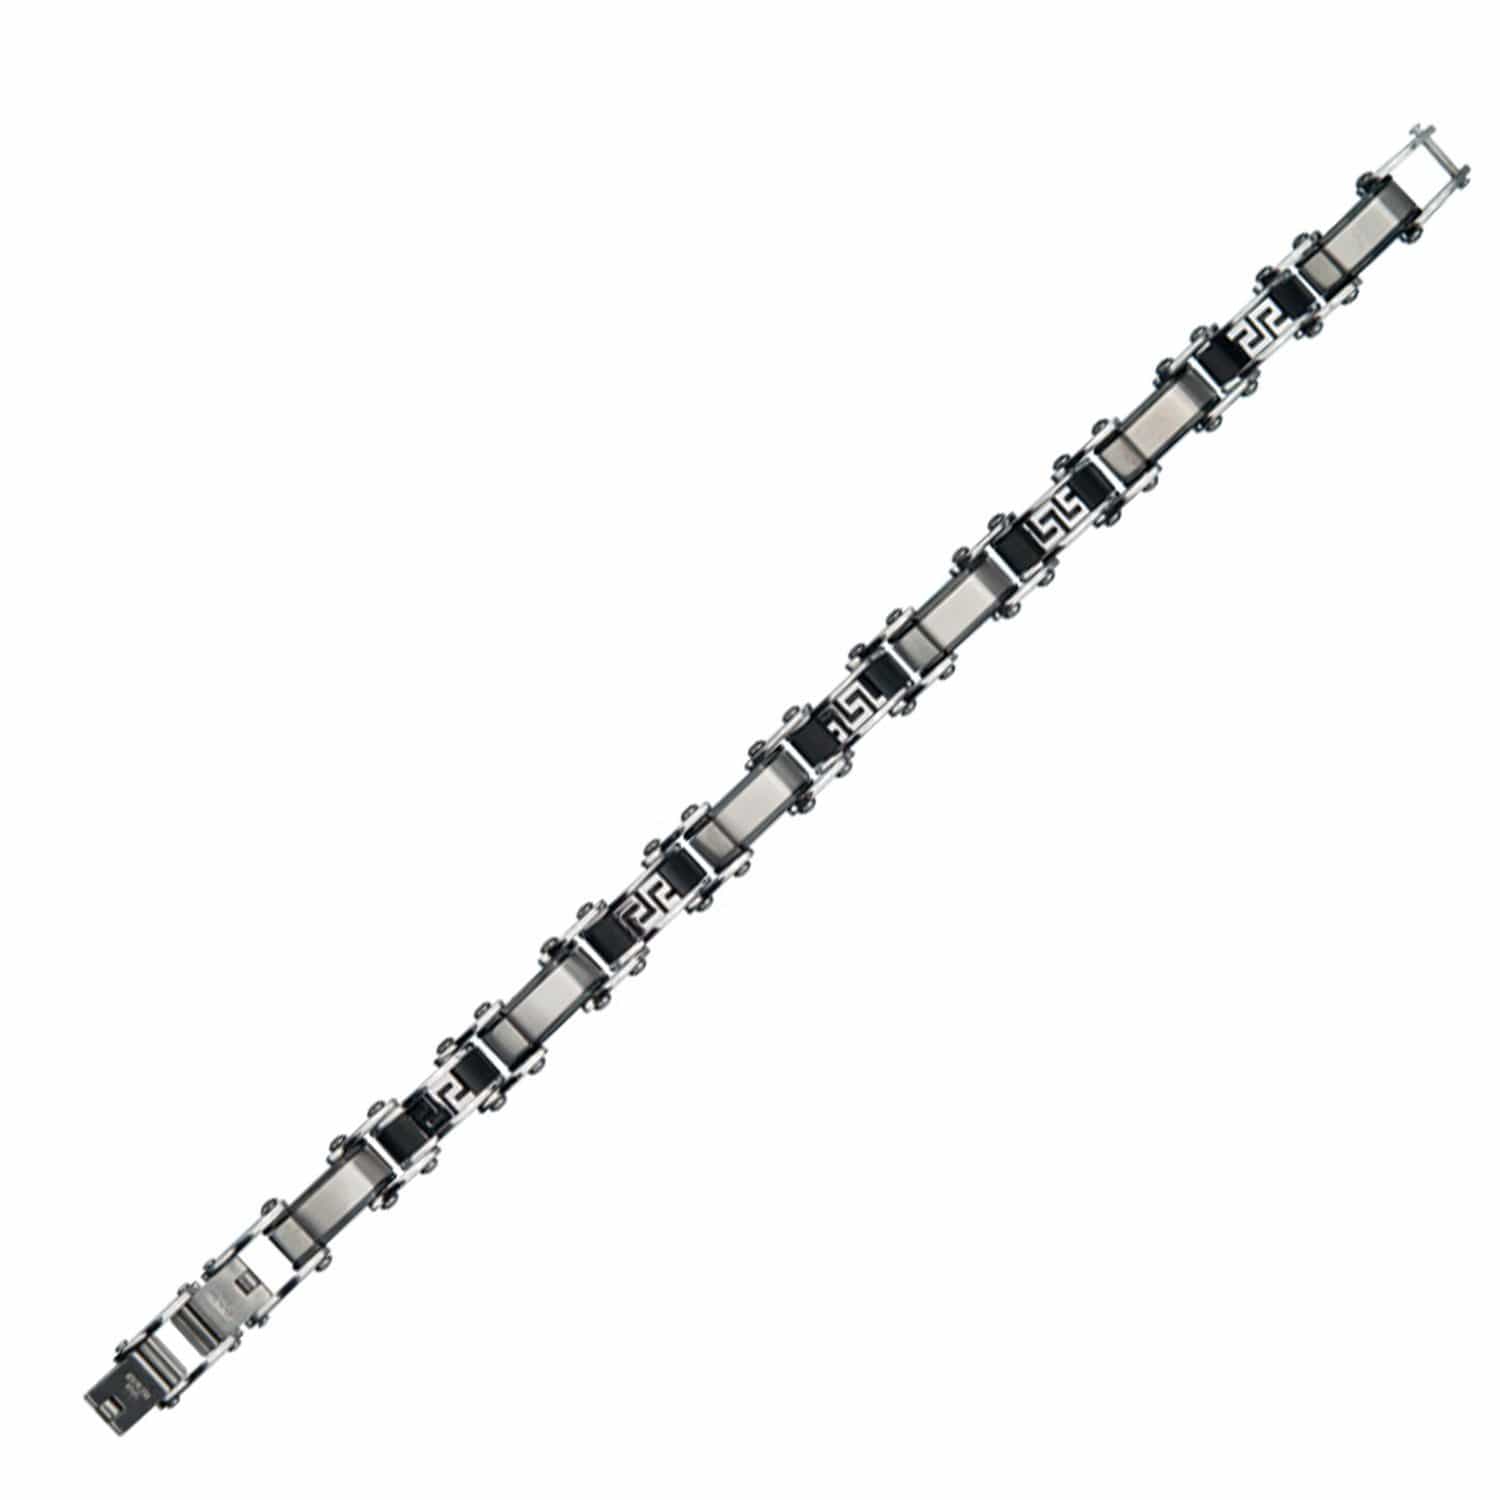 INOX JEWELRY Bracelets Brown, Black and Silver Tone Stainless Steel Reversible Bracelet BRDS3